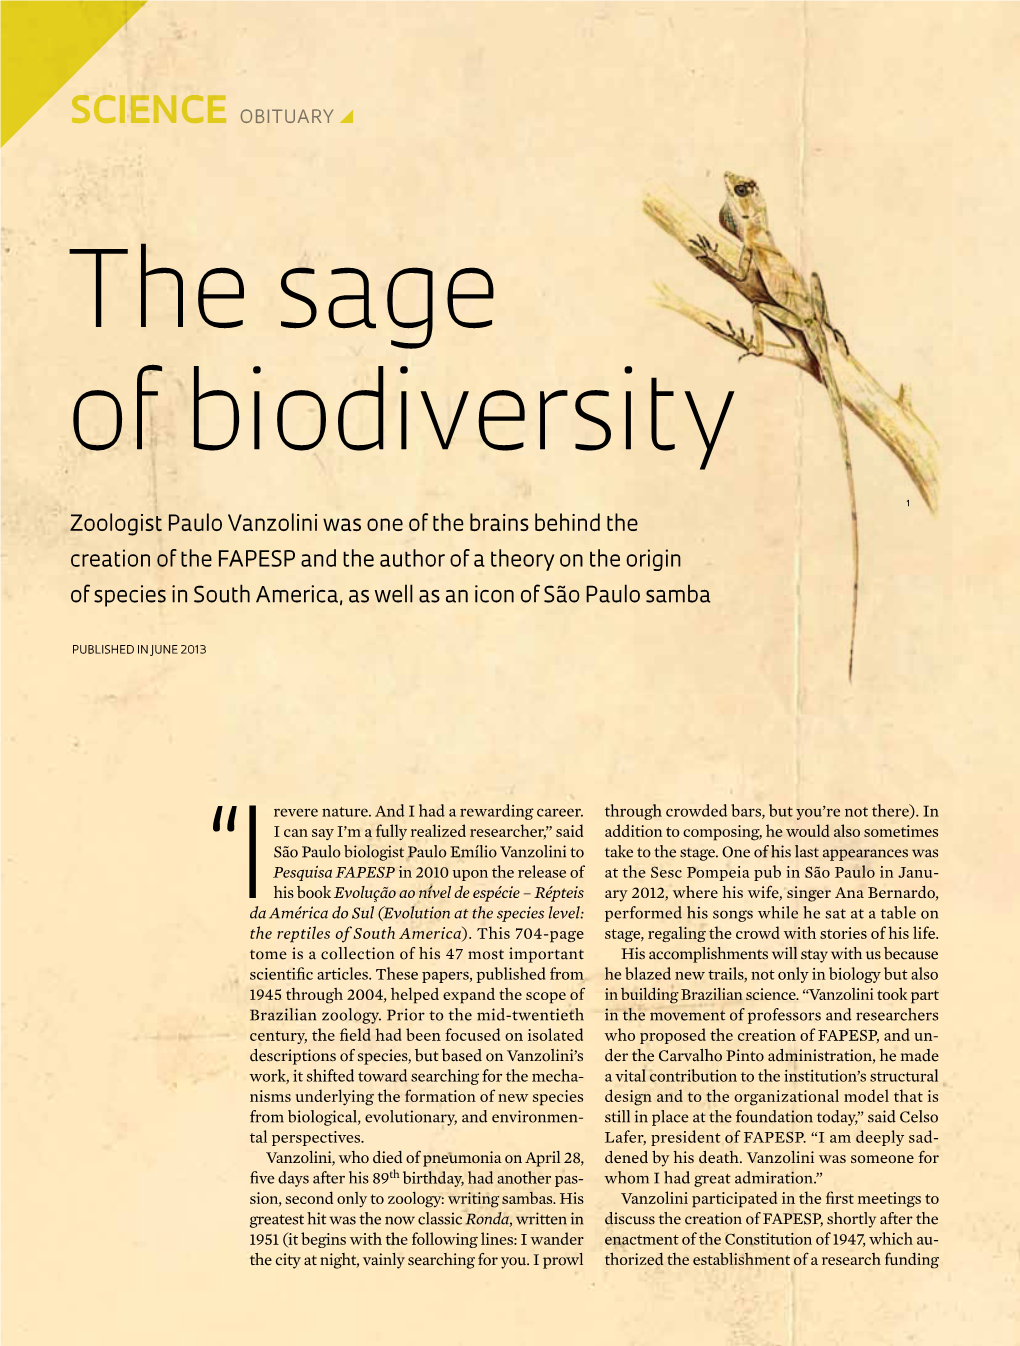 The Sage of Biodiversity